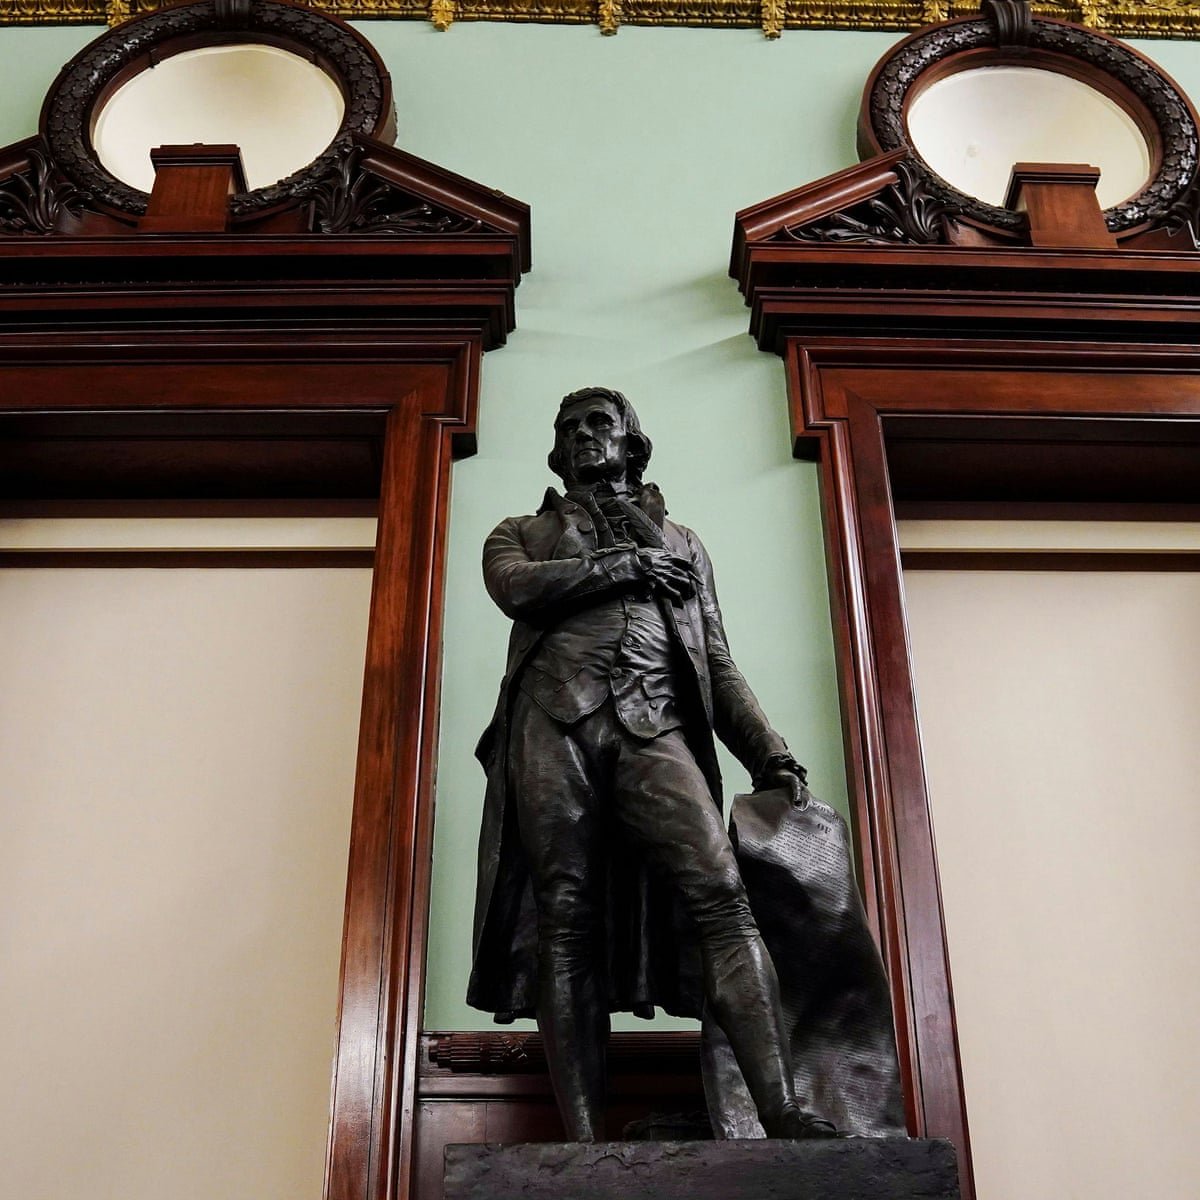 New York city hall removes Thomas Jefferson statue | New York | The Guardian